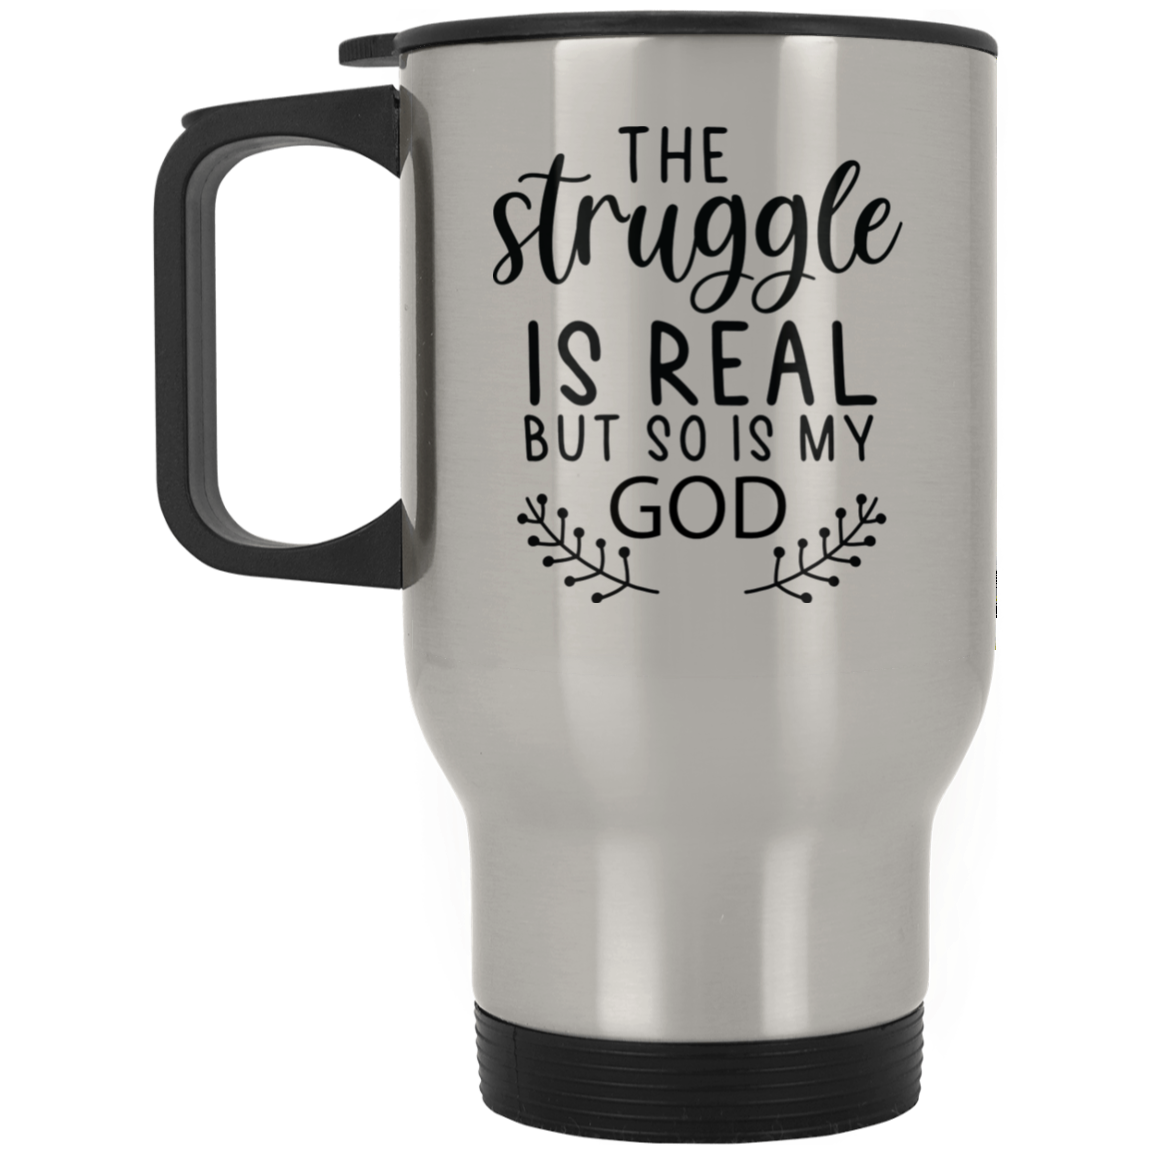 Struggle Silver Stainless Travel Mug